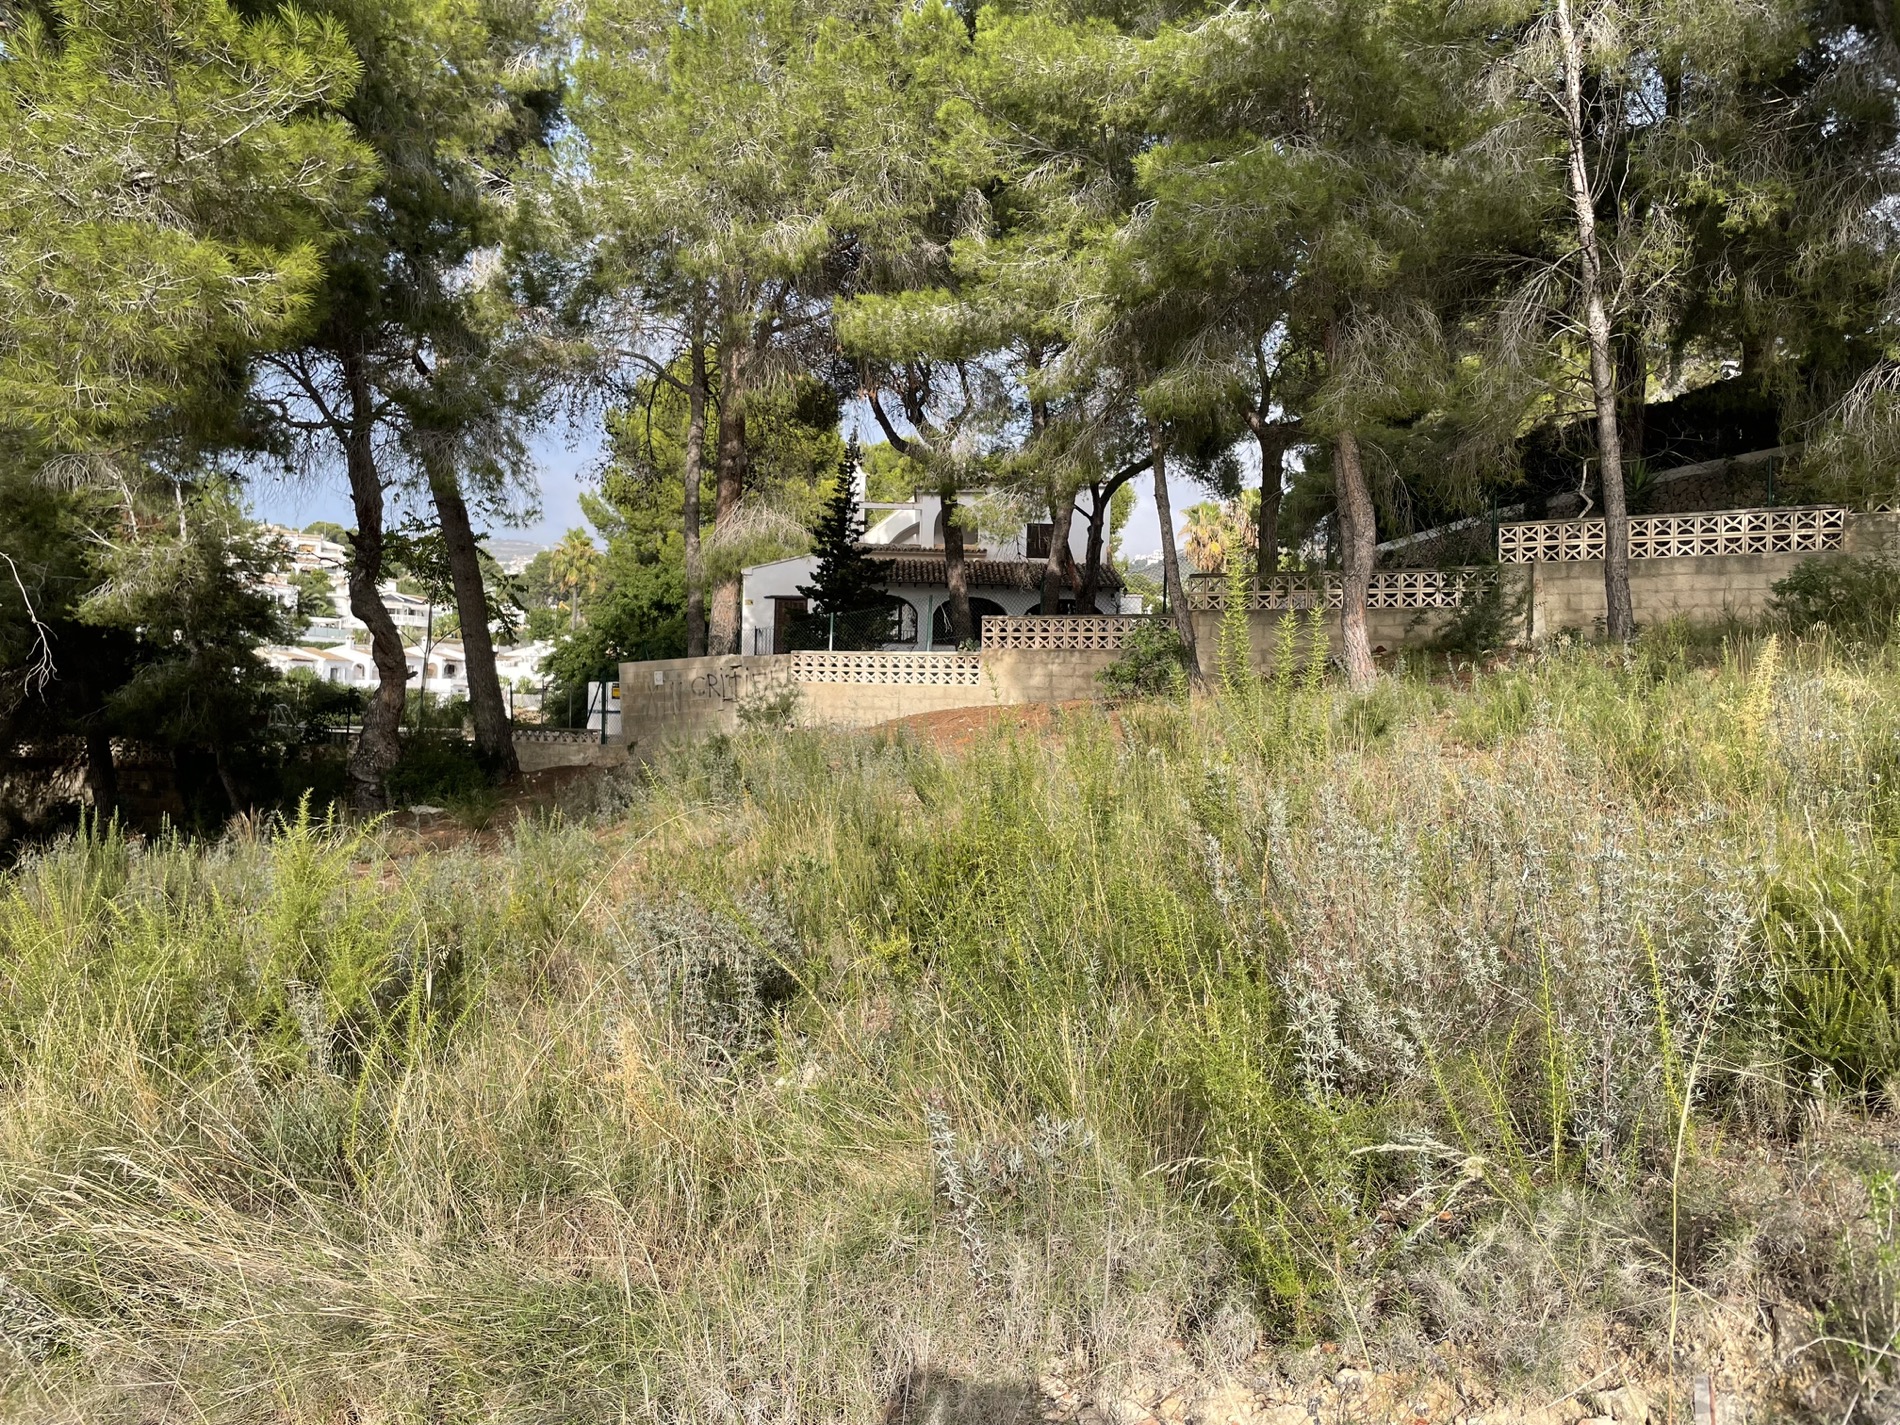 Plots for construction of 7 villas for sale in Costera del Mar Mar Moraira, Costa Blanca